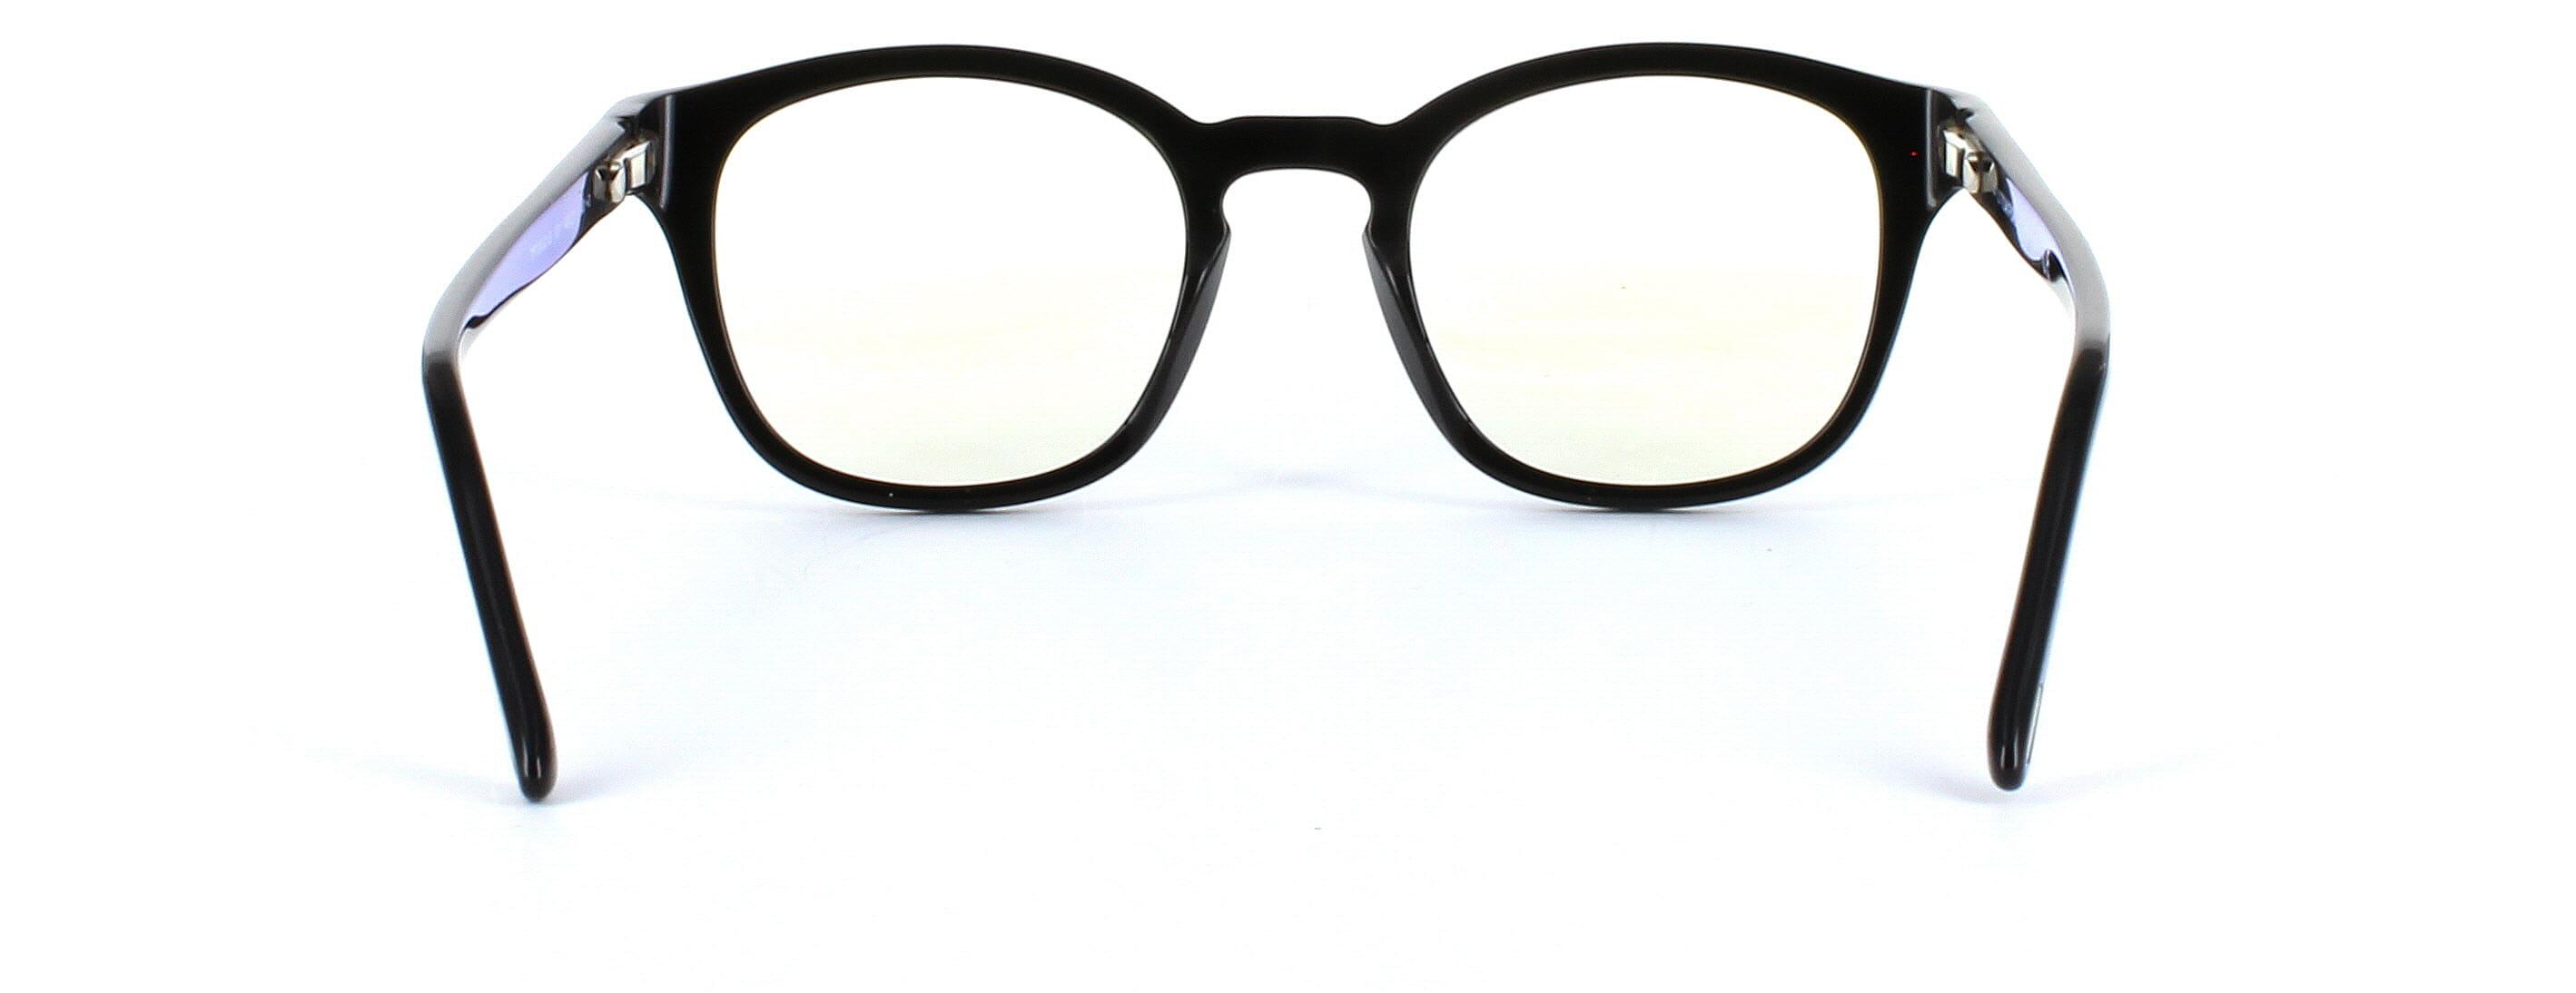 Tom Ford glasses model 5532 - Product image 3